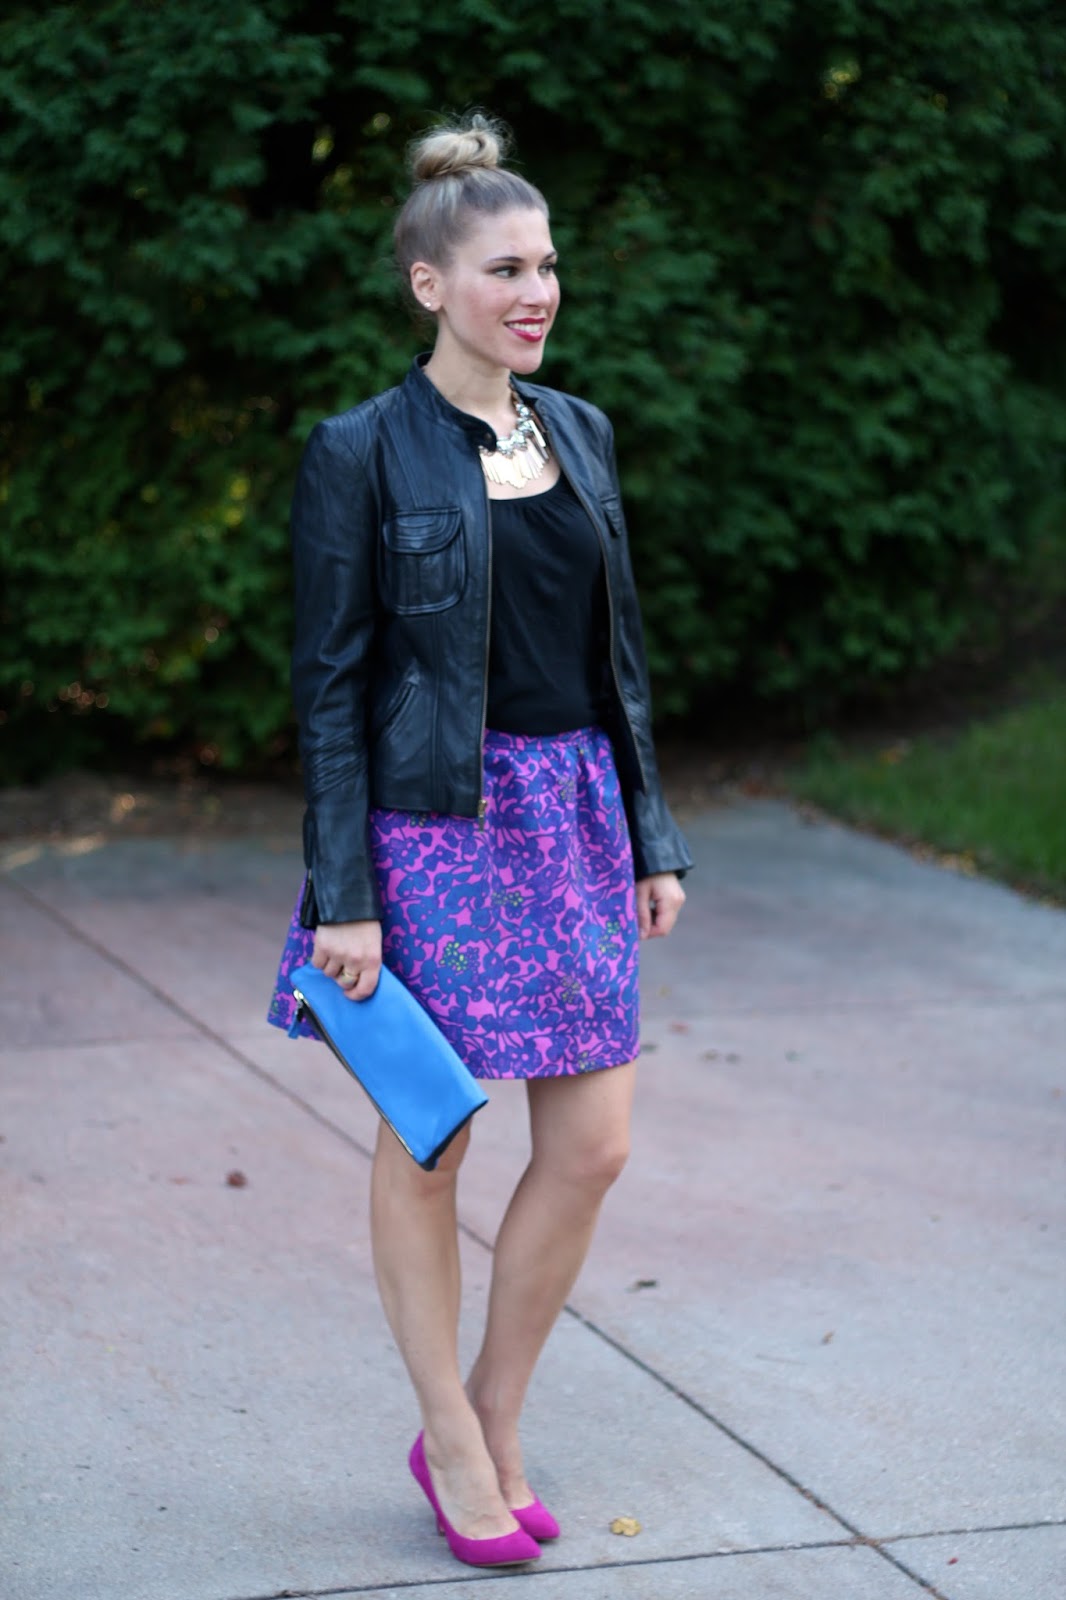 Floral Dress and Moto Jacket & Confident Twosday Linkup - I do